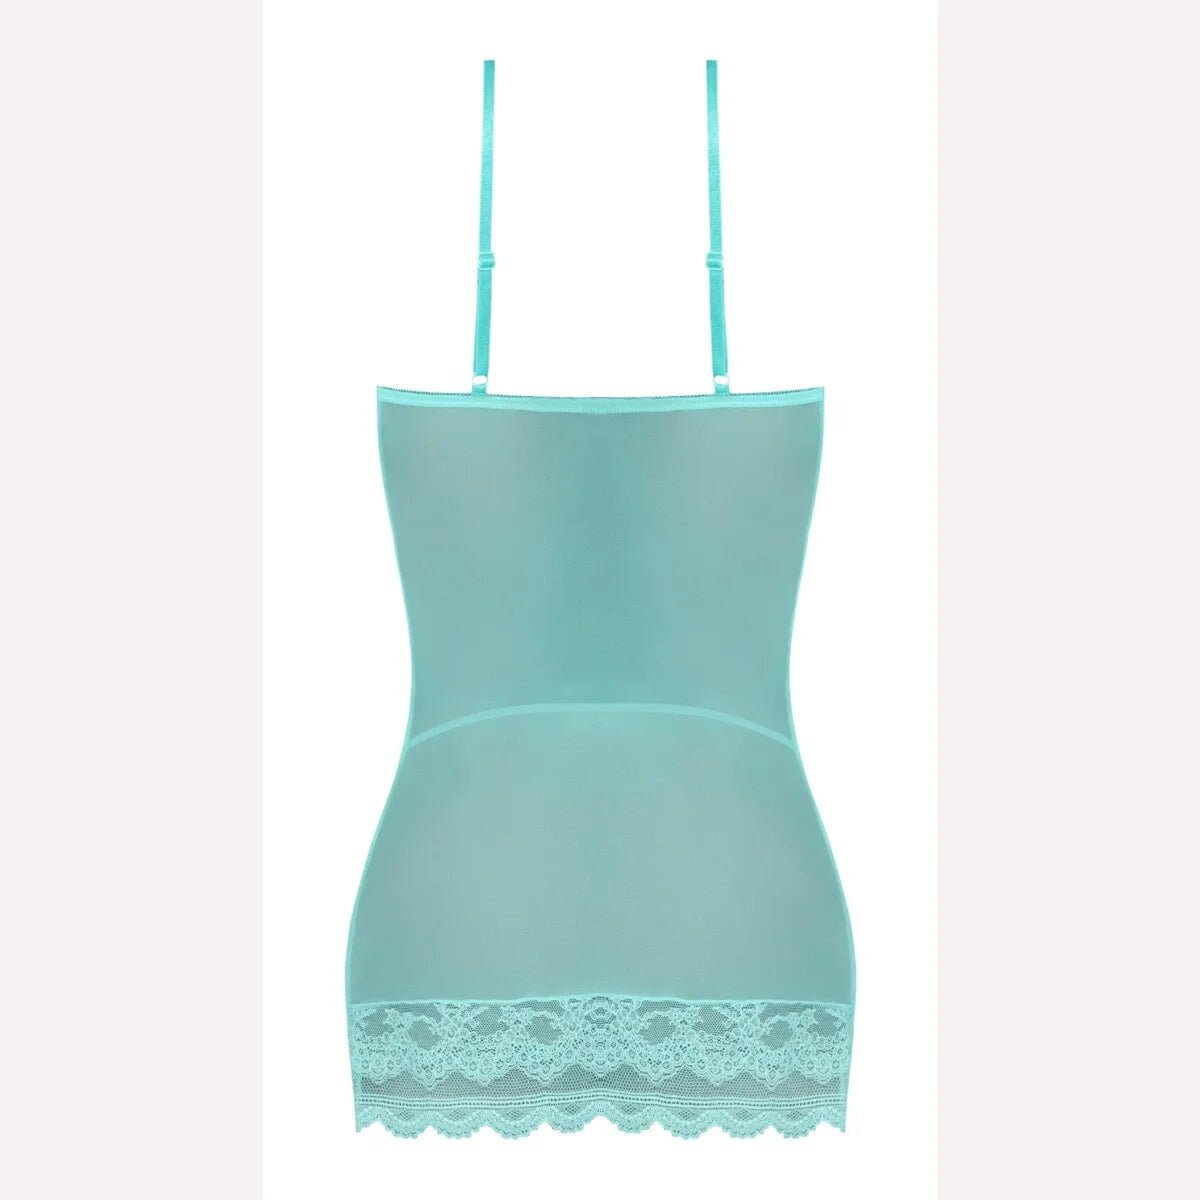 Seabreeze Lace Up Chemise & G Set Turquoise S/m Intimates Adult Boutique